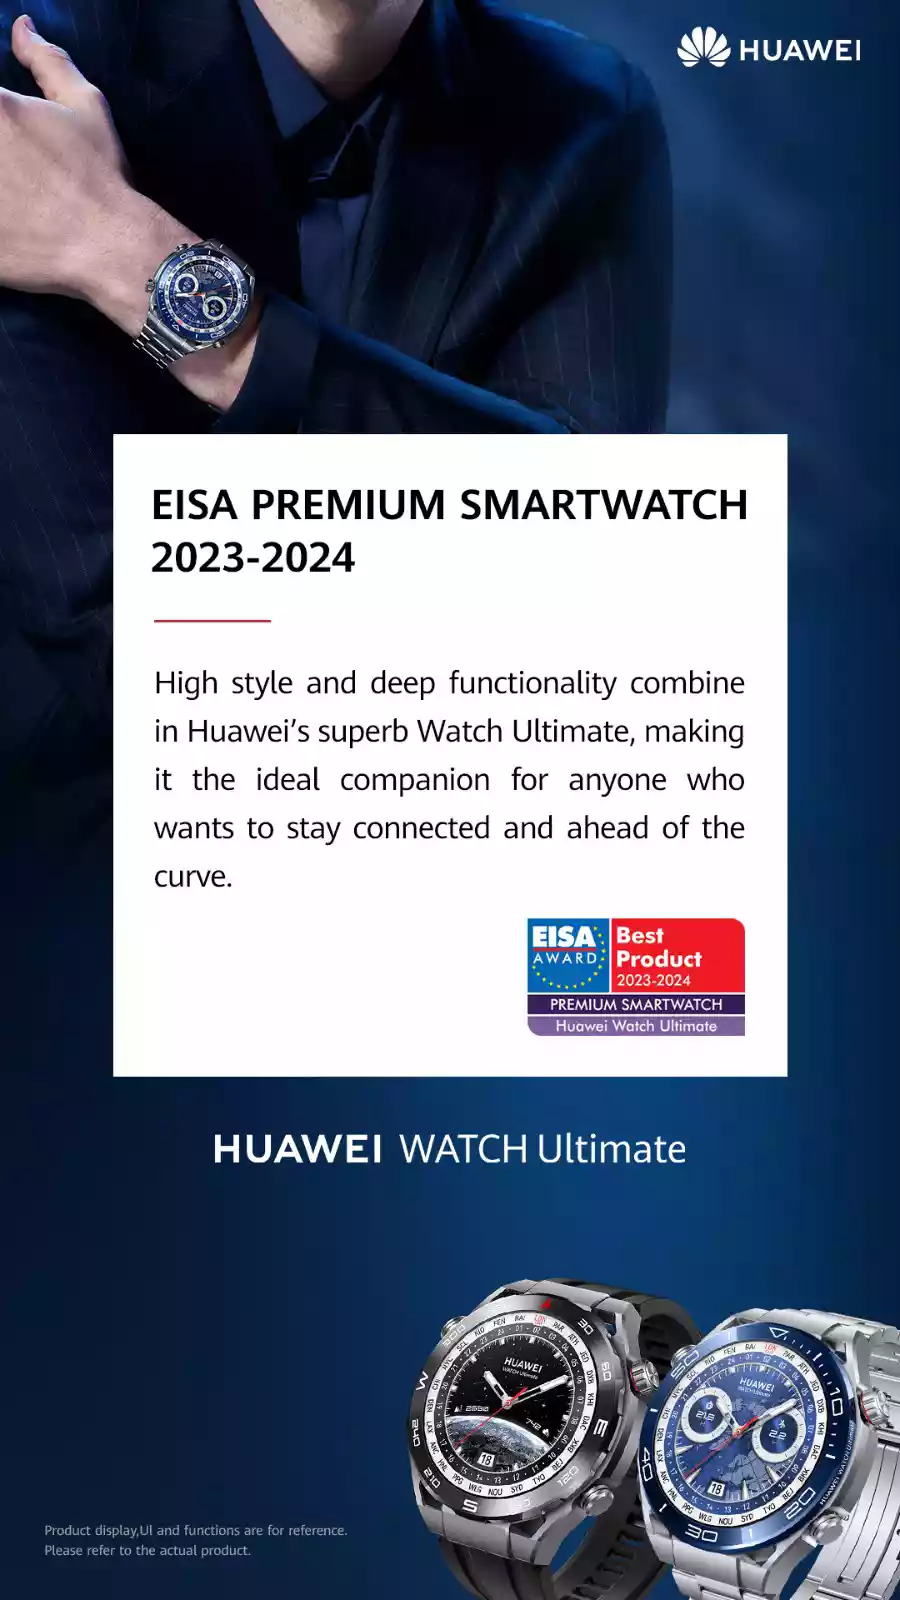 Huawei Watch Ultimate EISA award